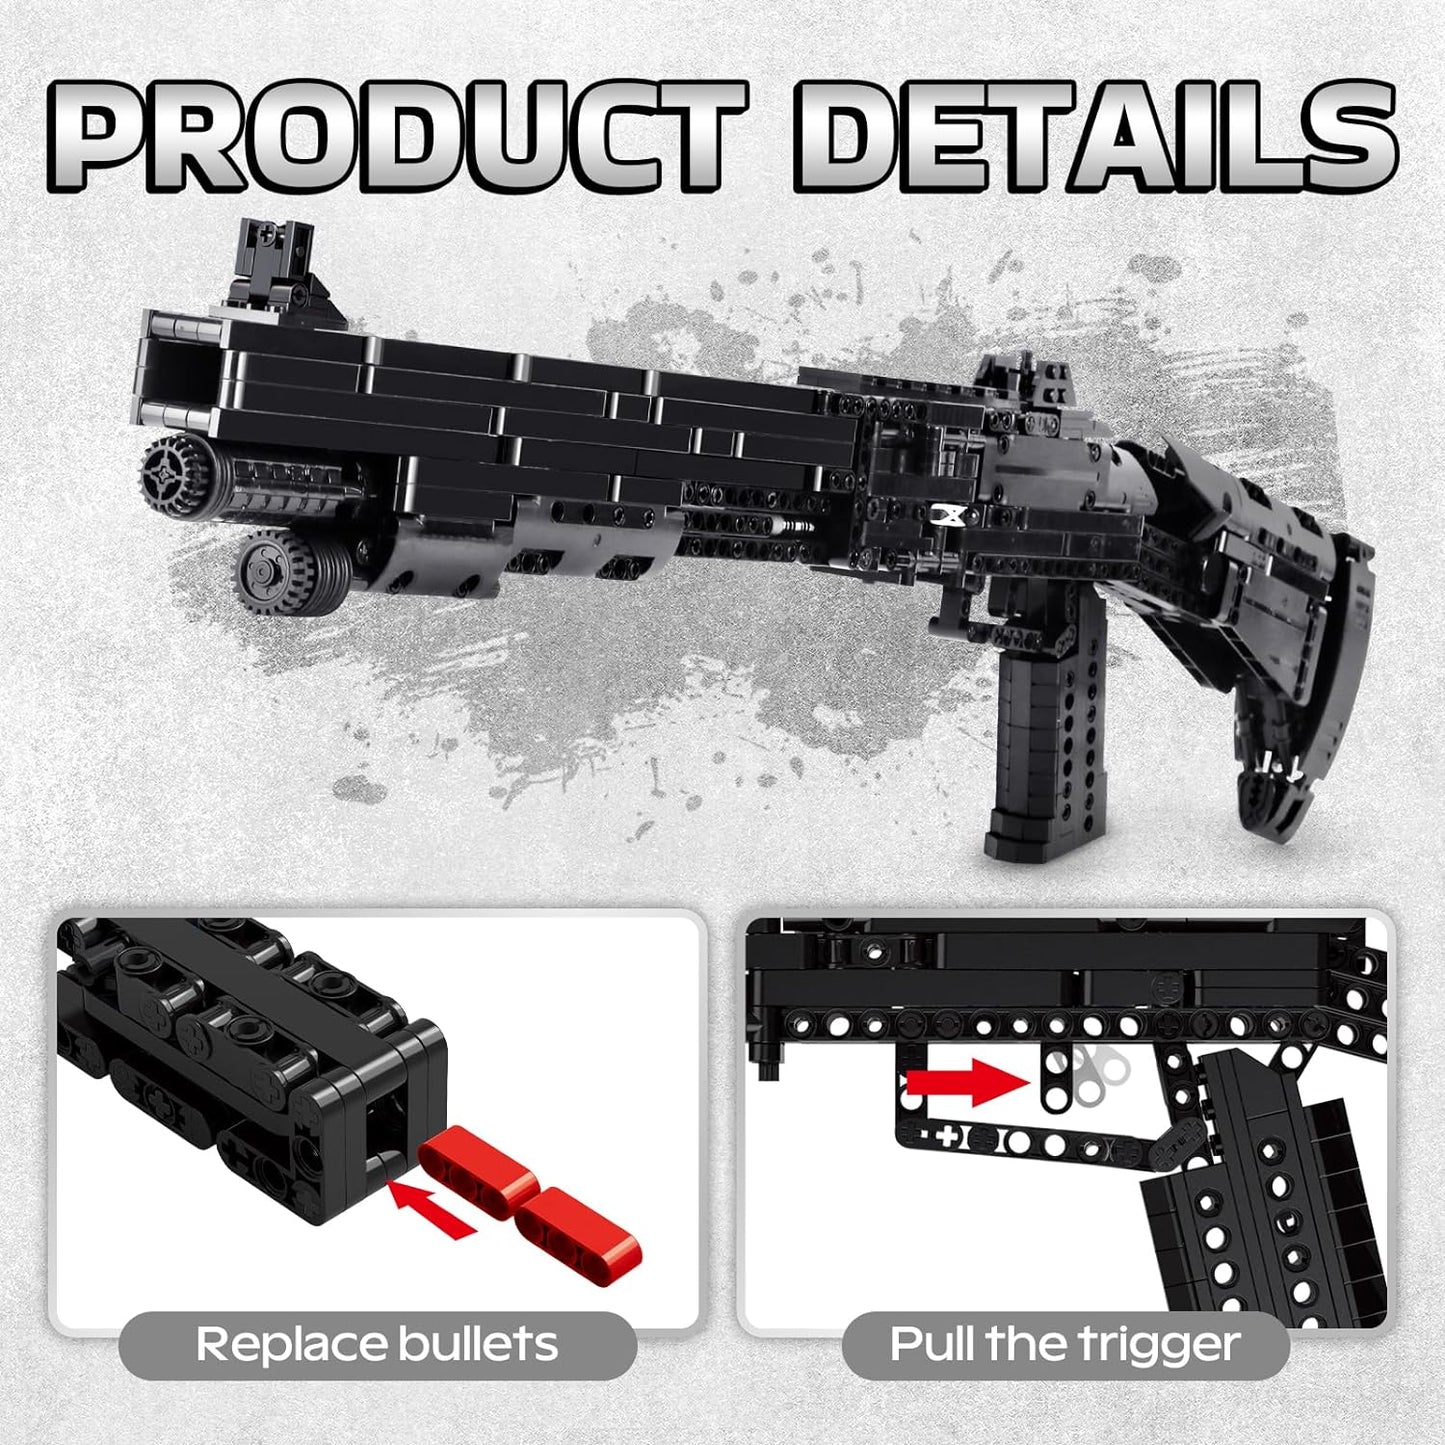 1:1 M4 Building Bricks Gun Collection Toy - 1061+ PCS Model Gun Building Block Sniper Set Shootable - Gift Collectible Surprises